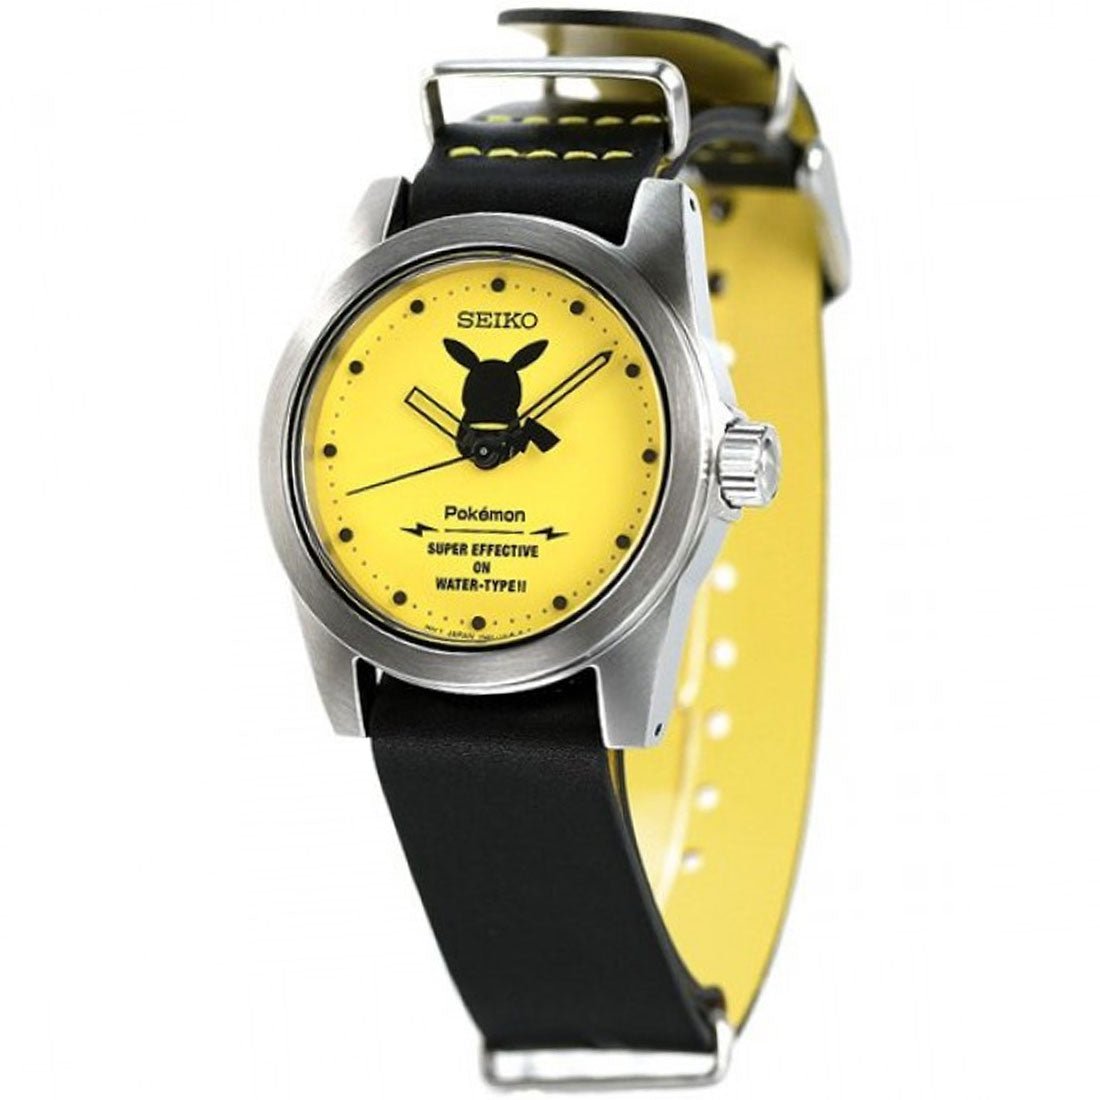 Seiko JDM SCXP175 Pikachu Pokemon Limited Edition Leather Watch -Seiko